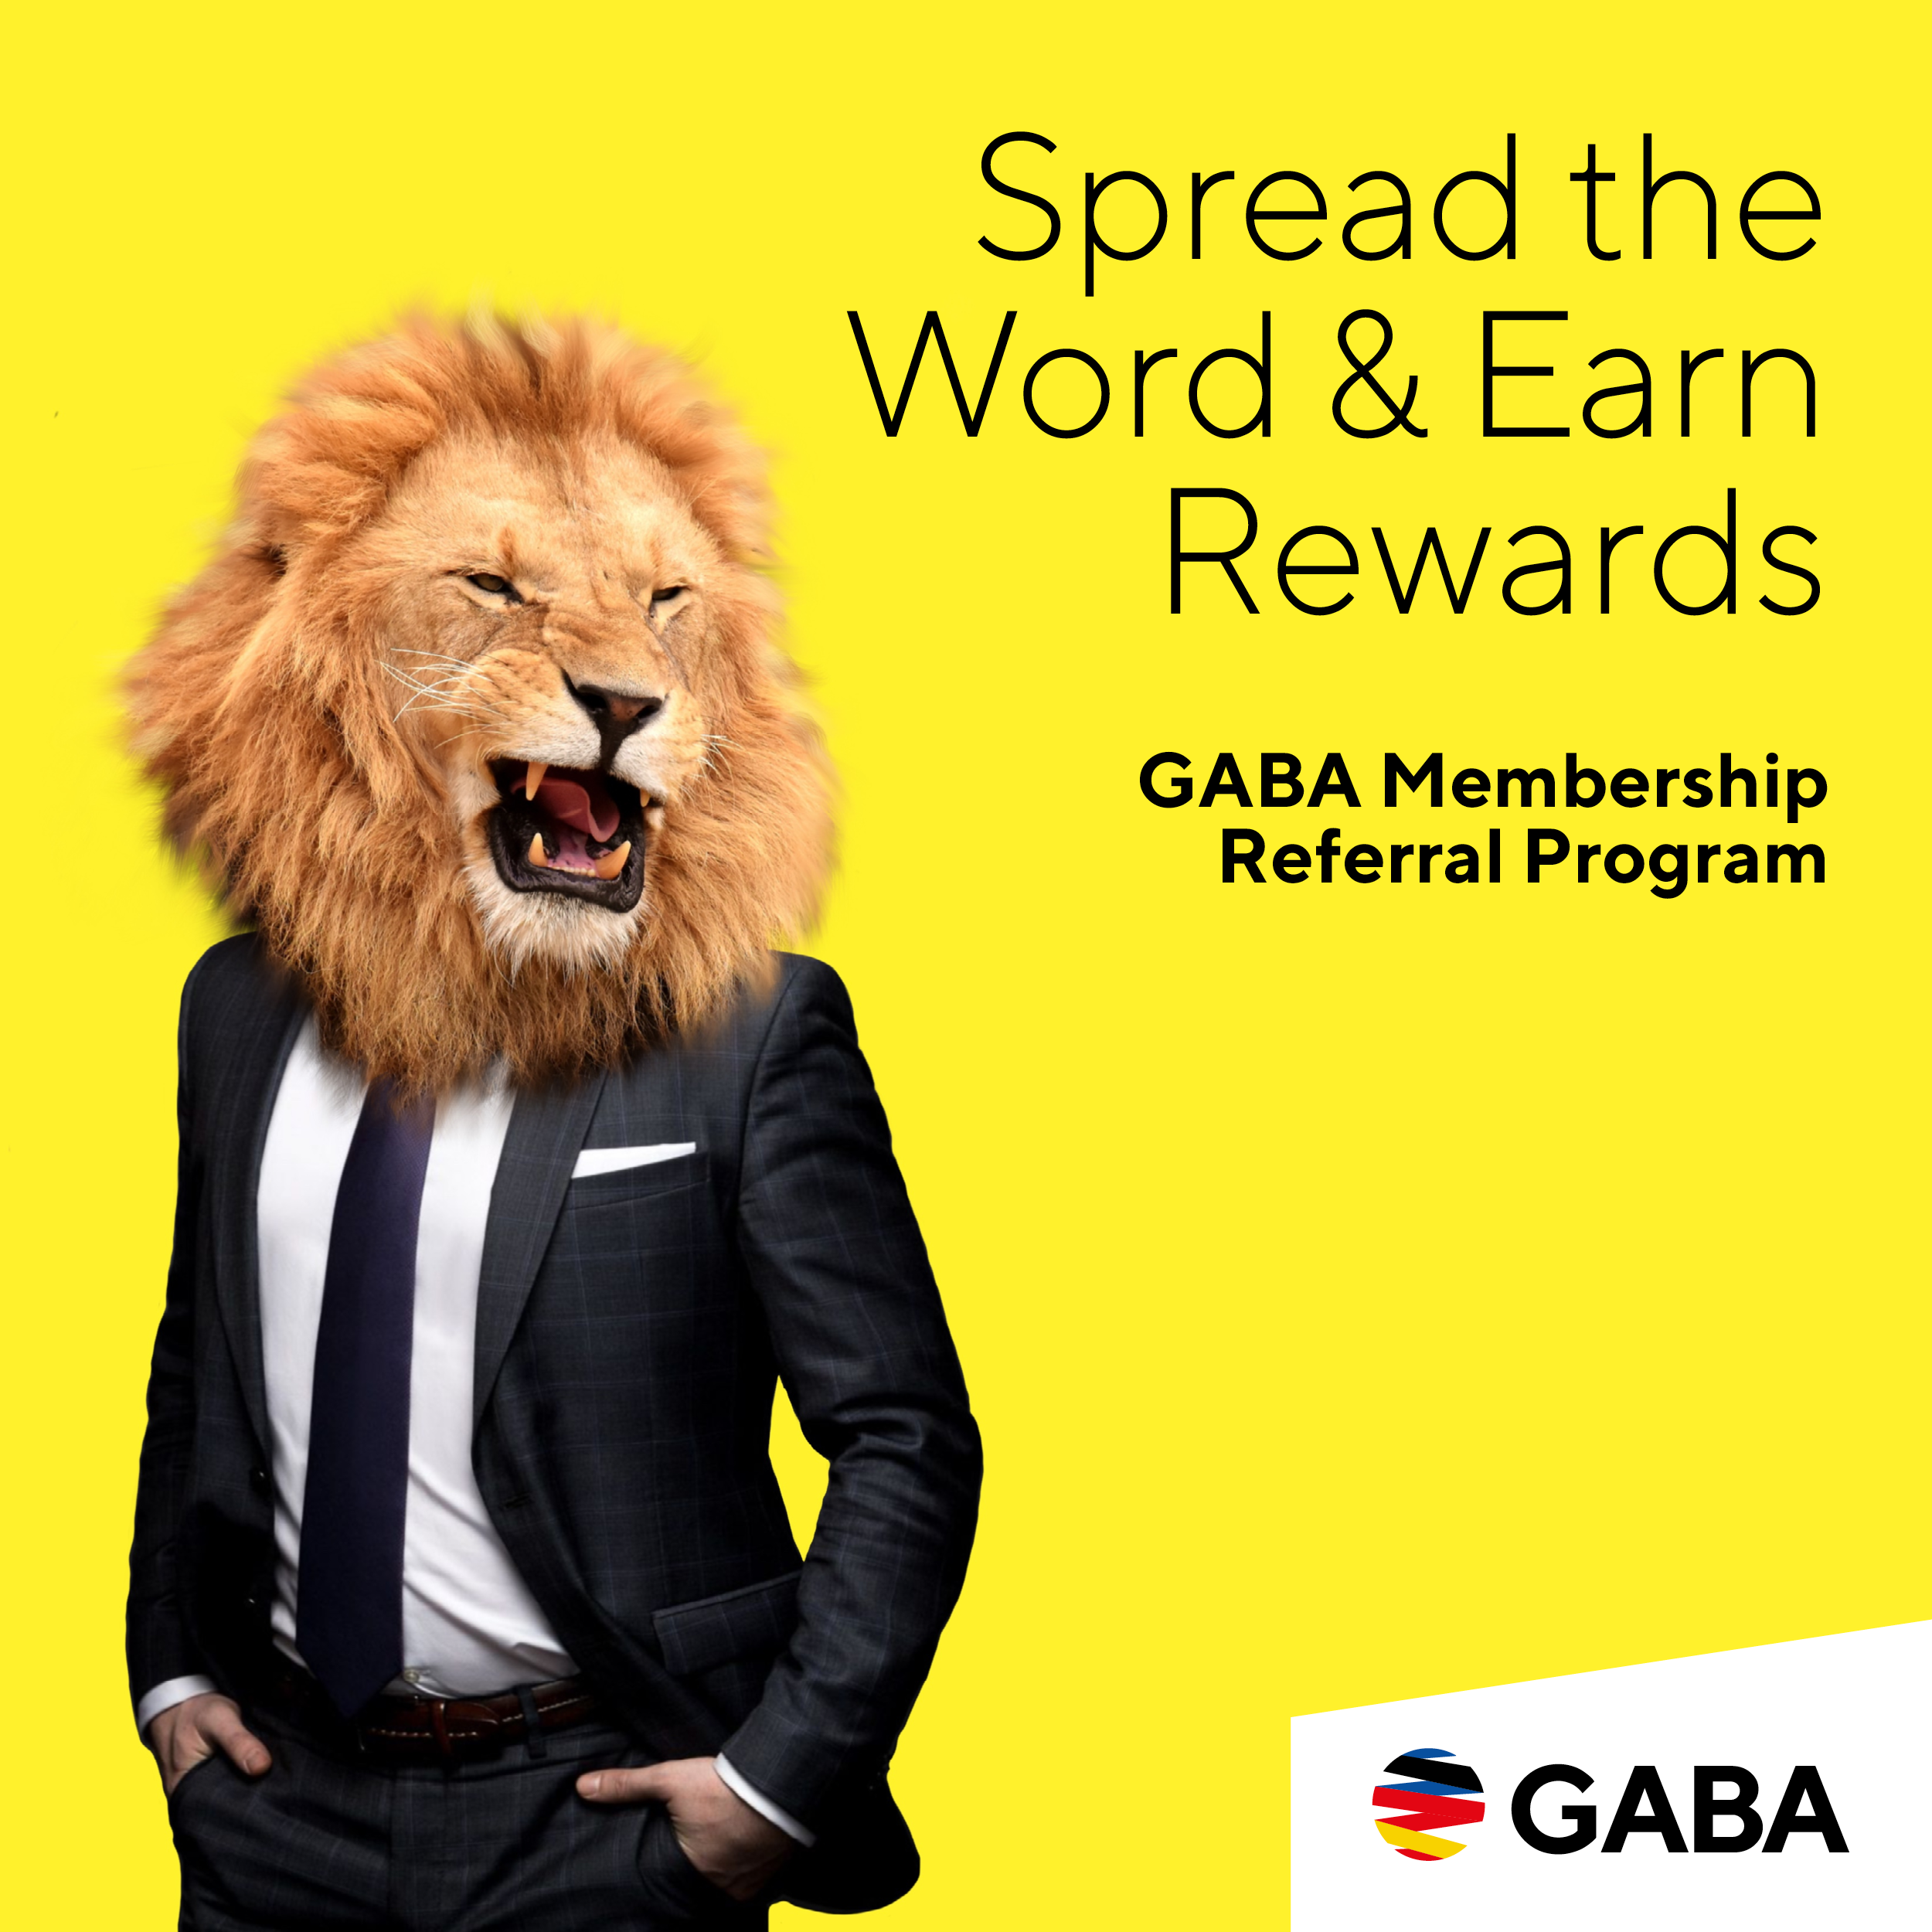 GABA Membership Referral Program